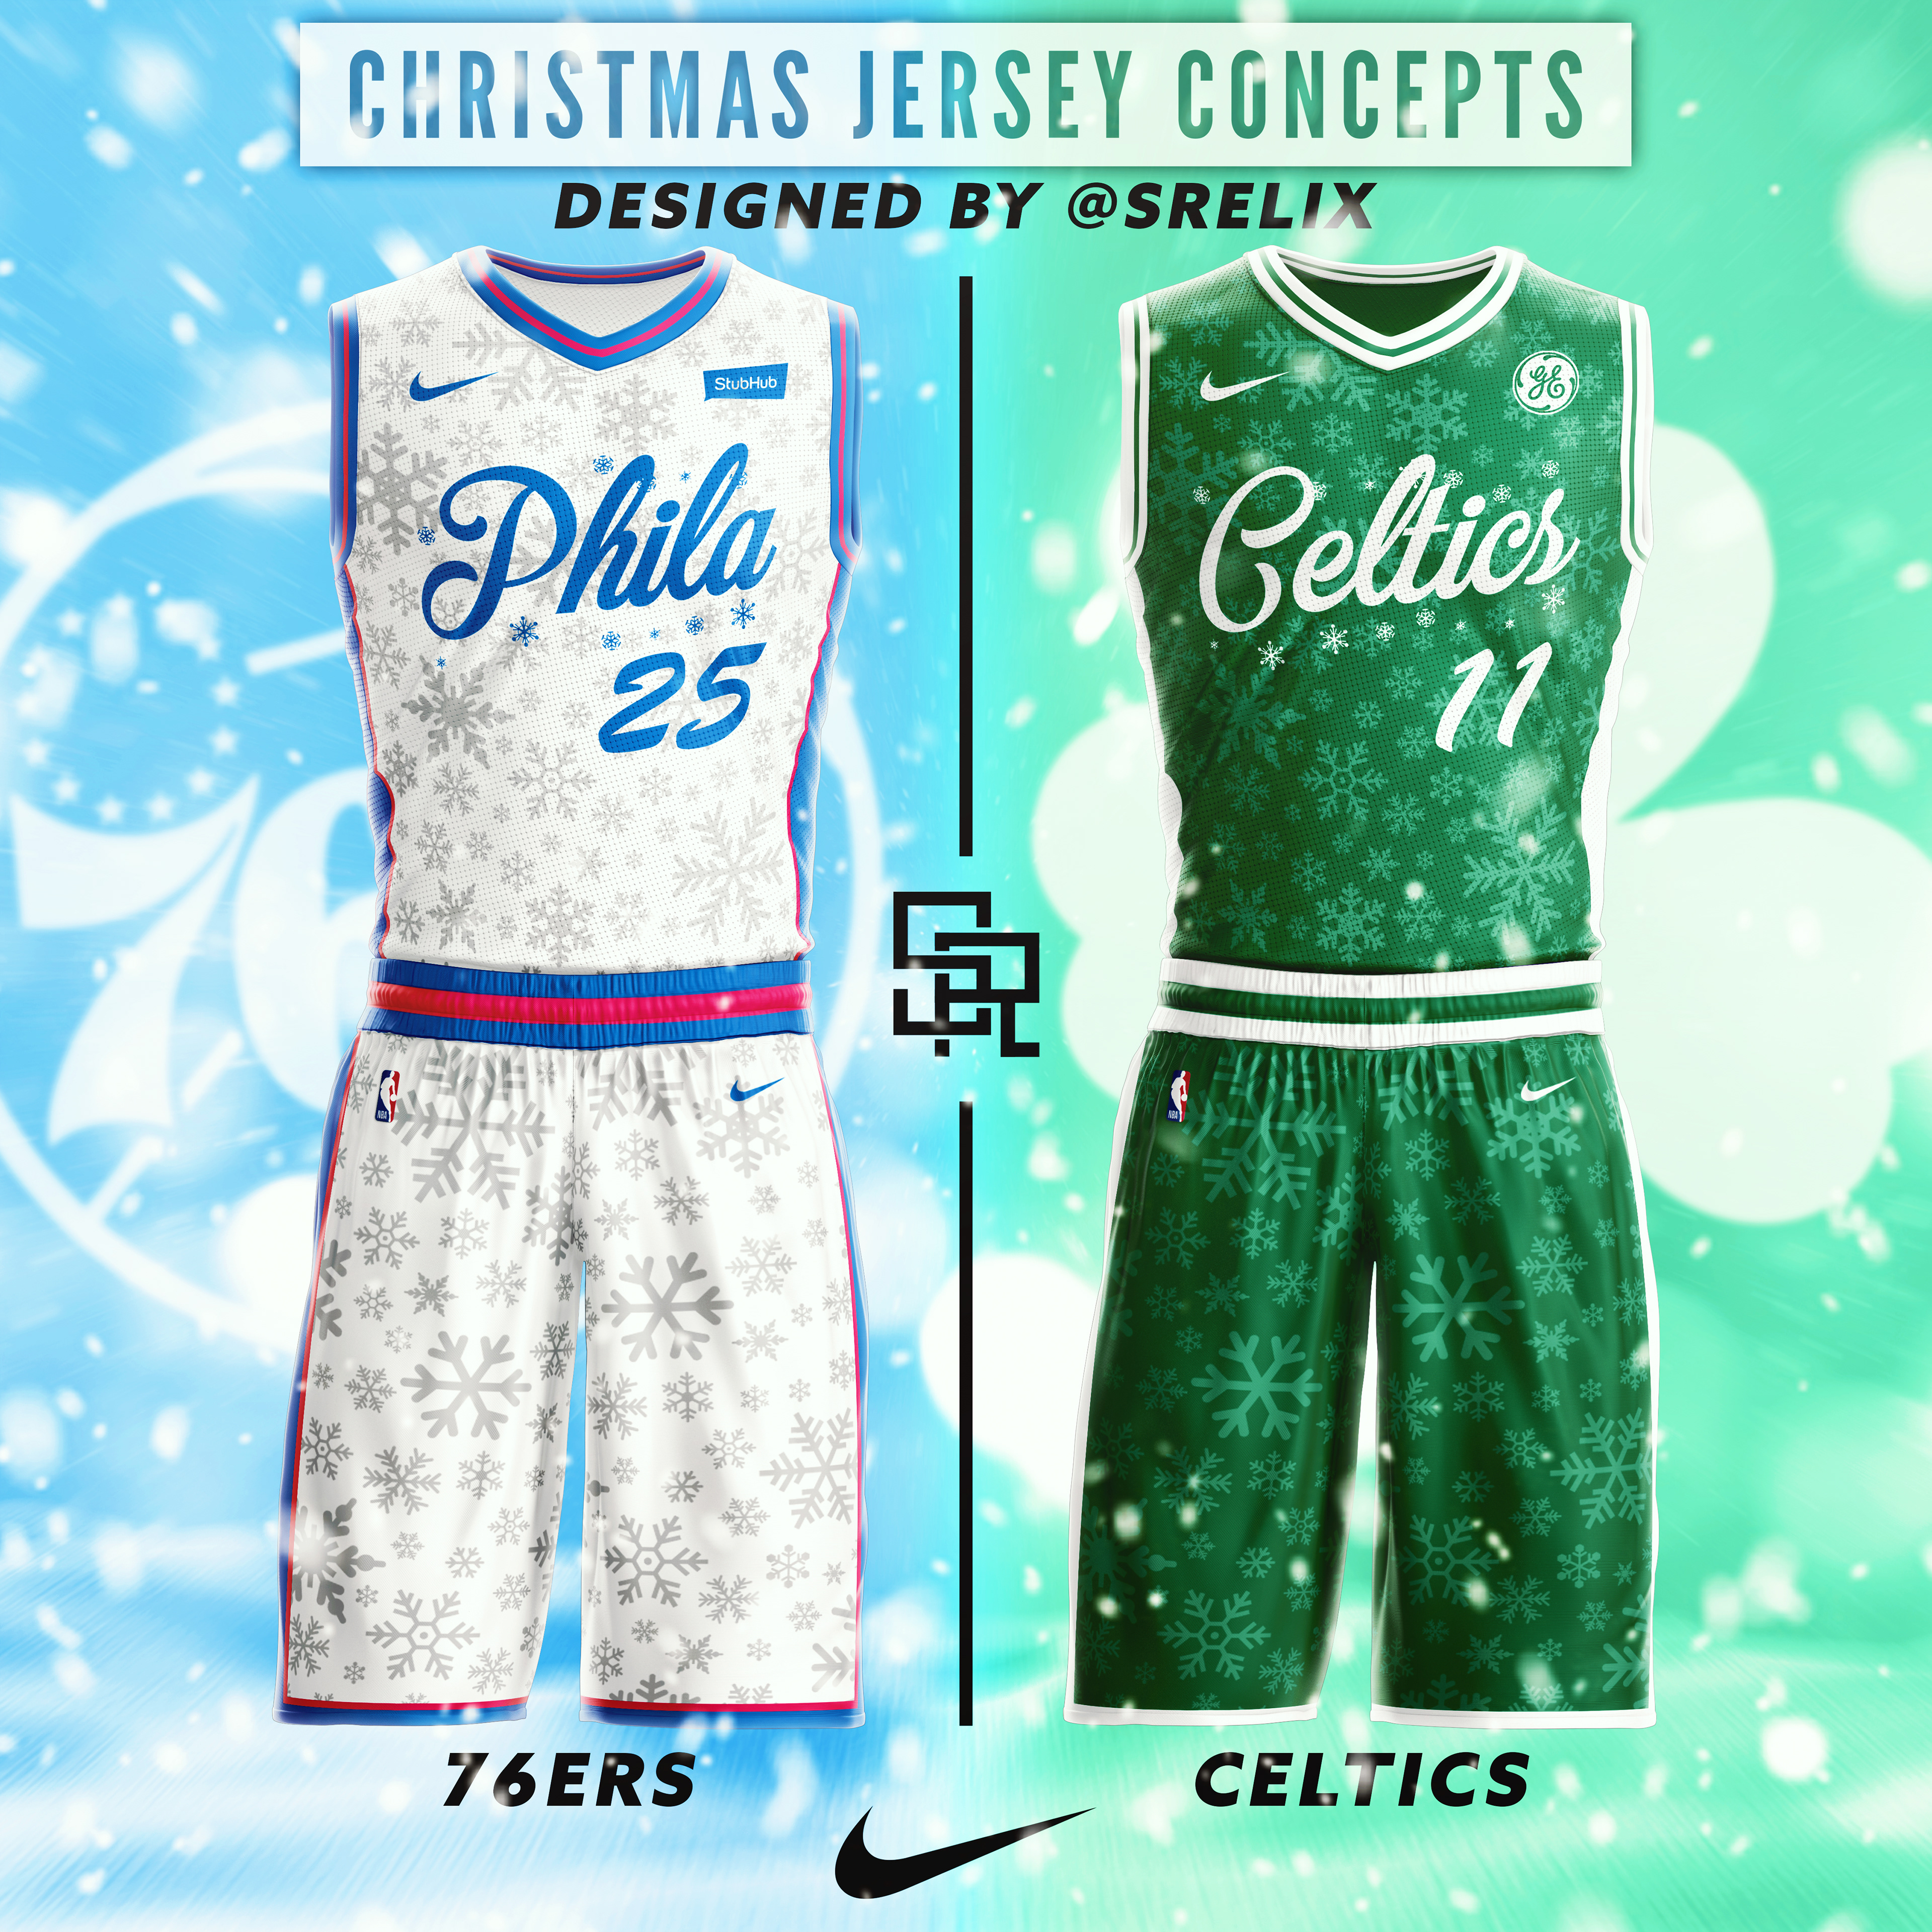 SRELIX Portfolio - NBA Christmas 2019 Jersey Concepts